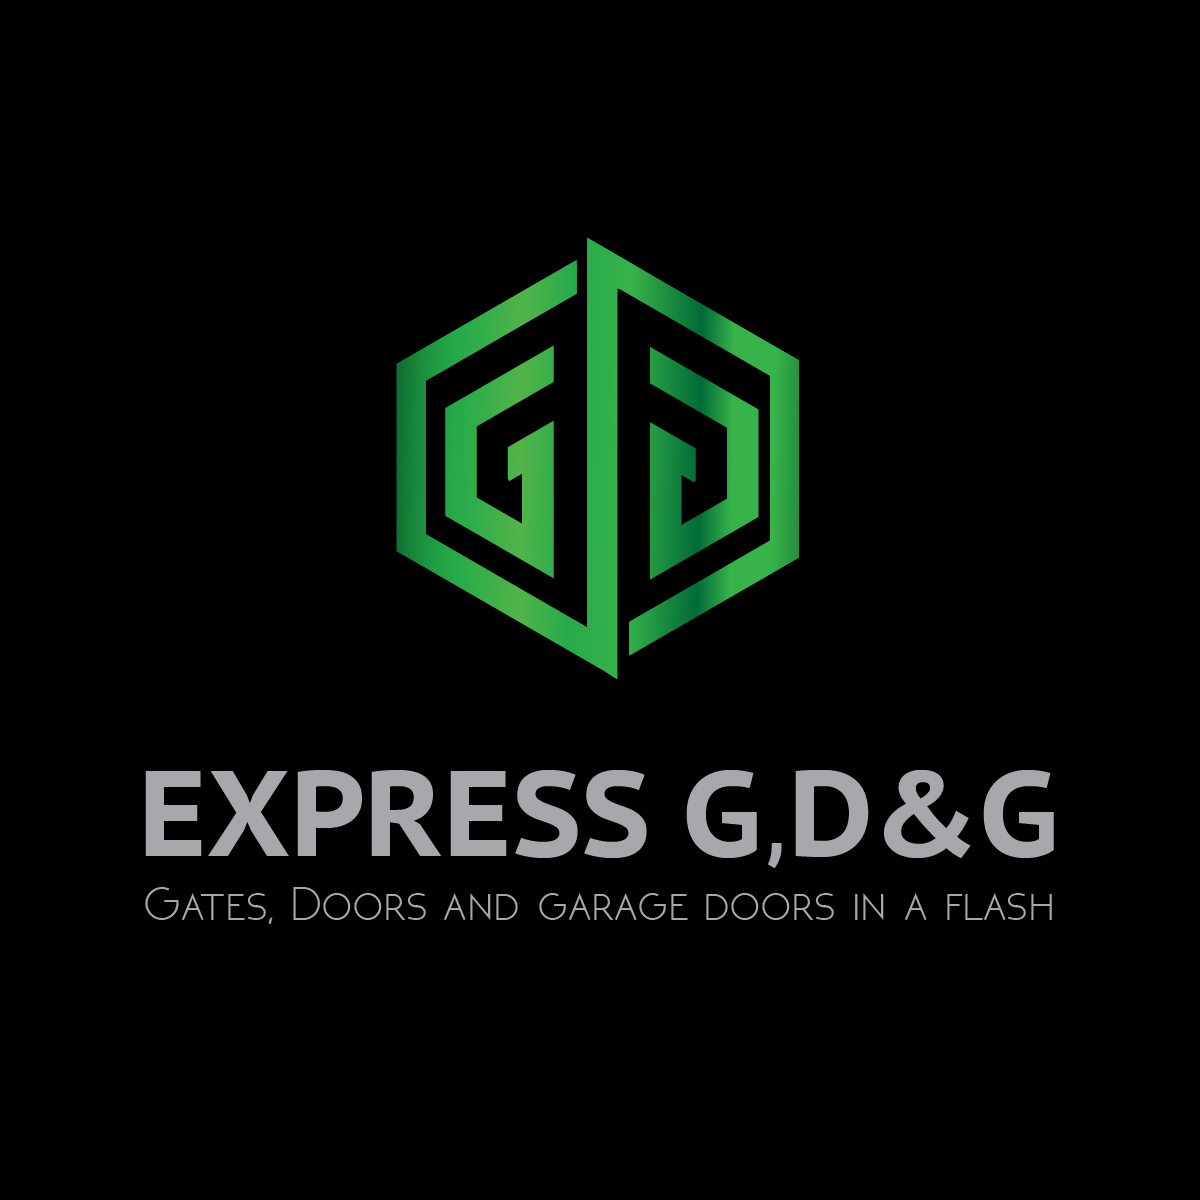 Express GDG, LLC Logo